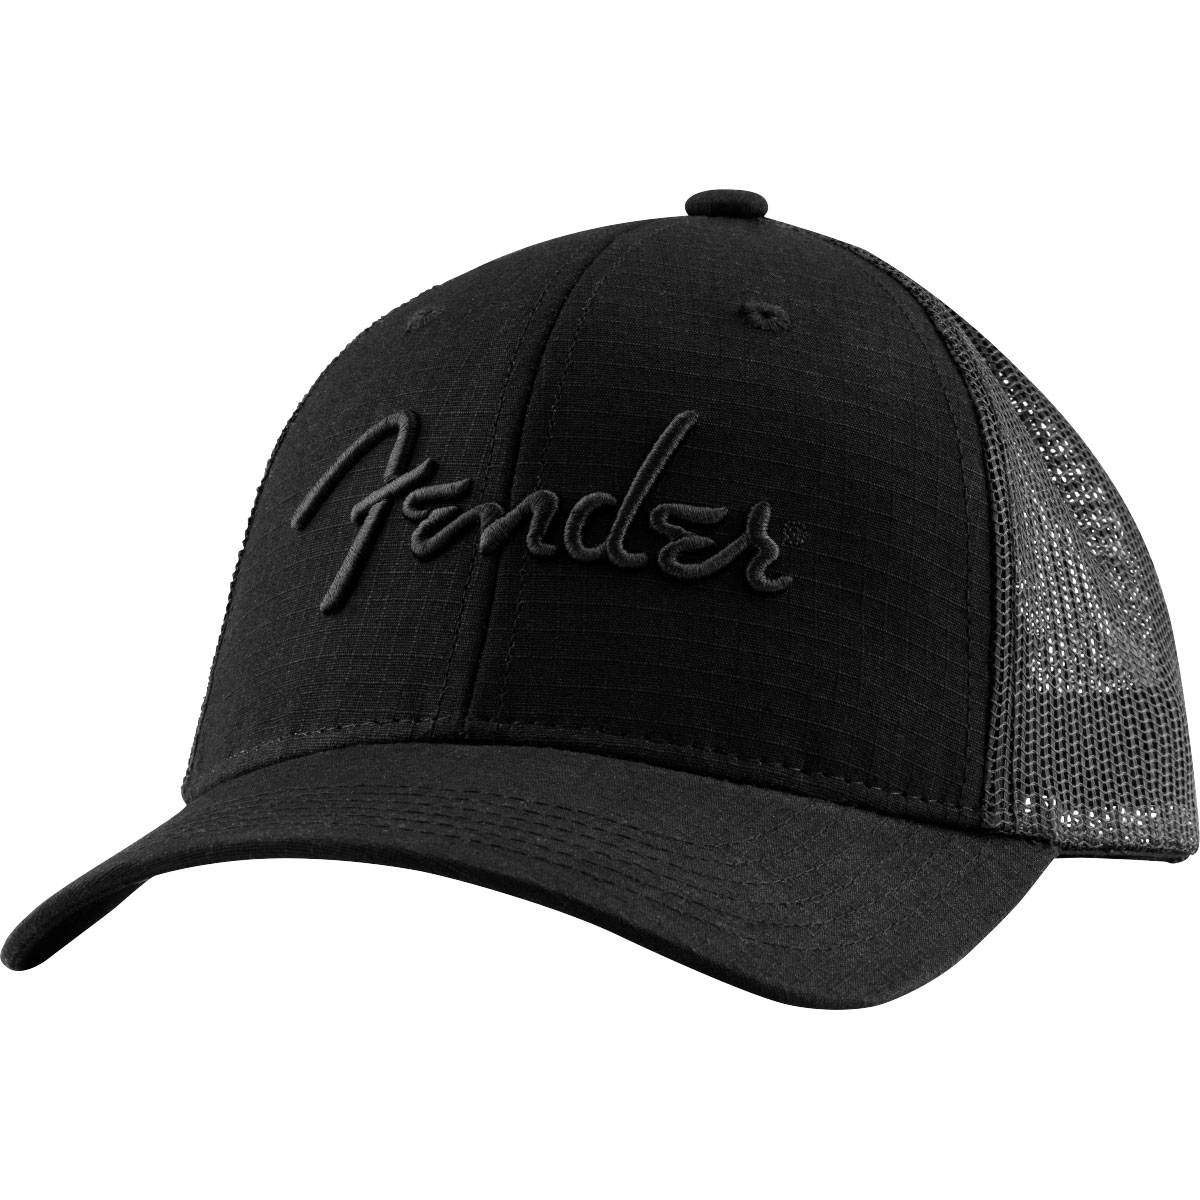 Fender nap Back Pick Holder Hat Black キャップ 